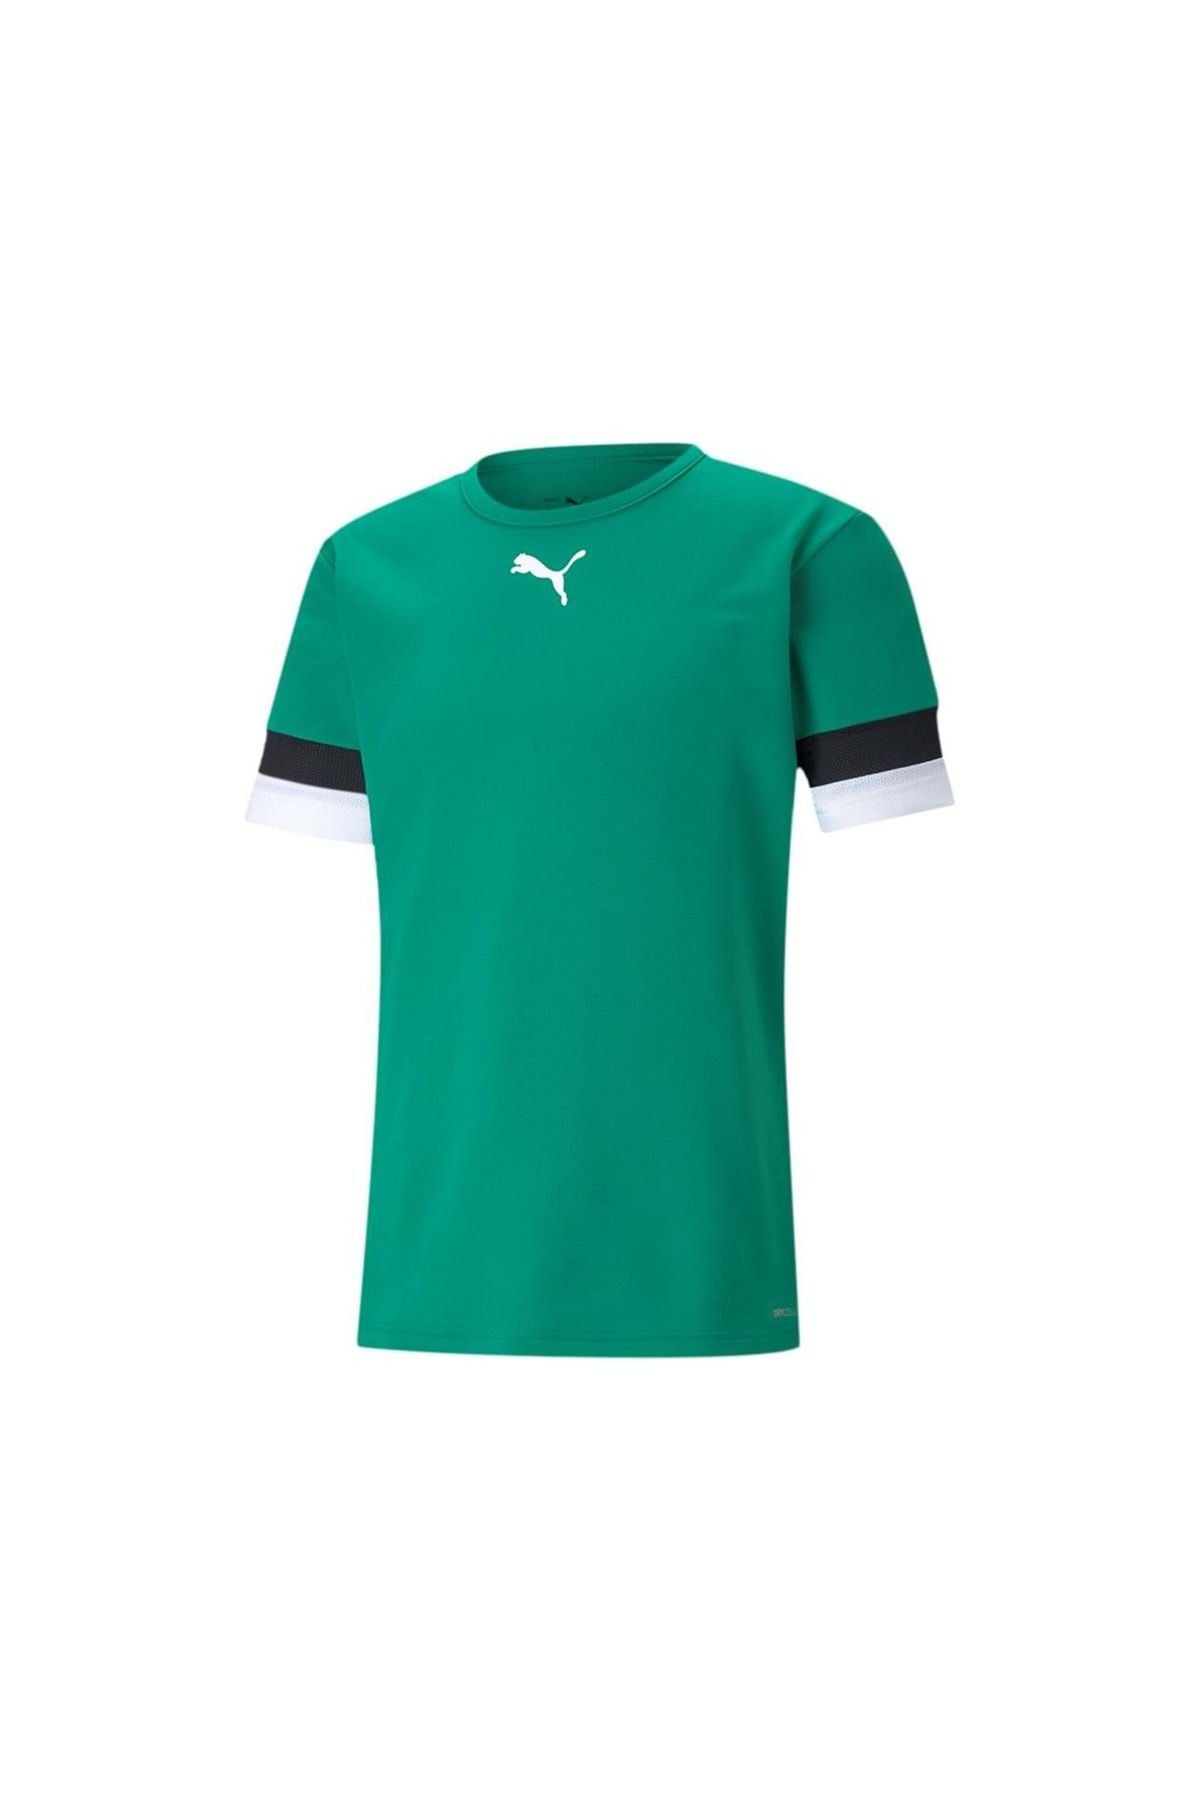 Puma 704932 Teamrise Jersey T-shirt Dry-cell Erkek Tişört Yeşil